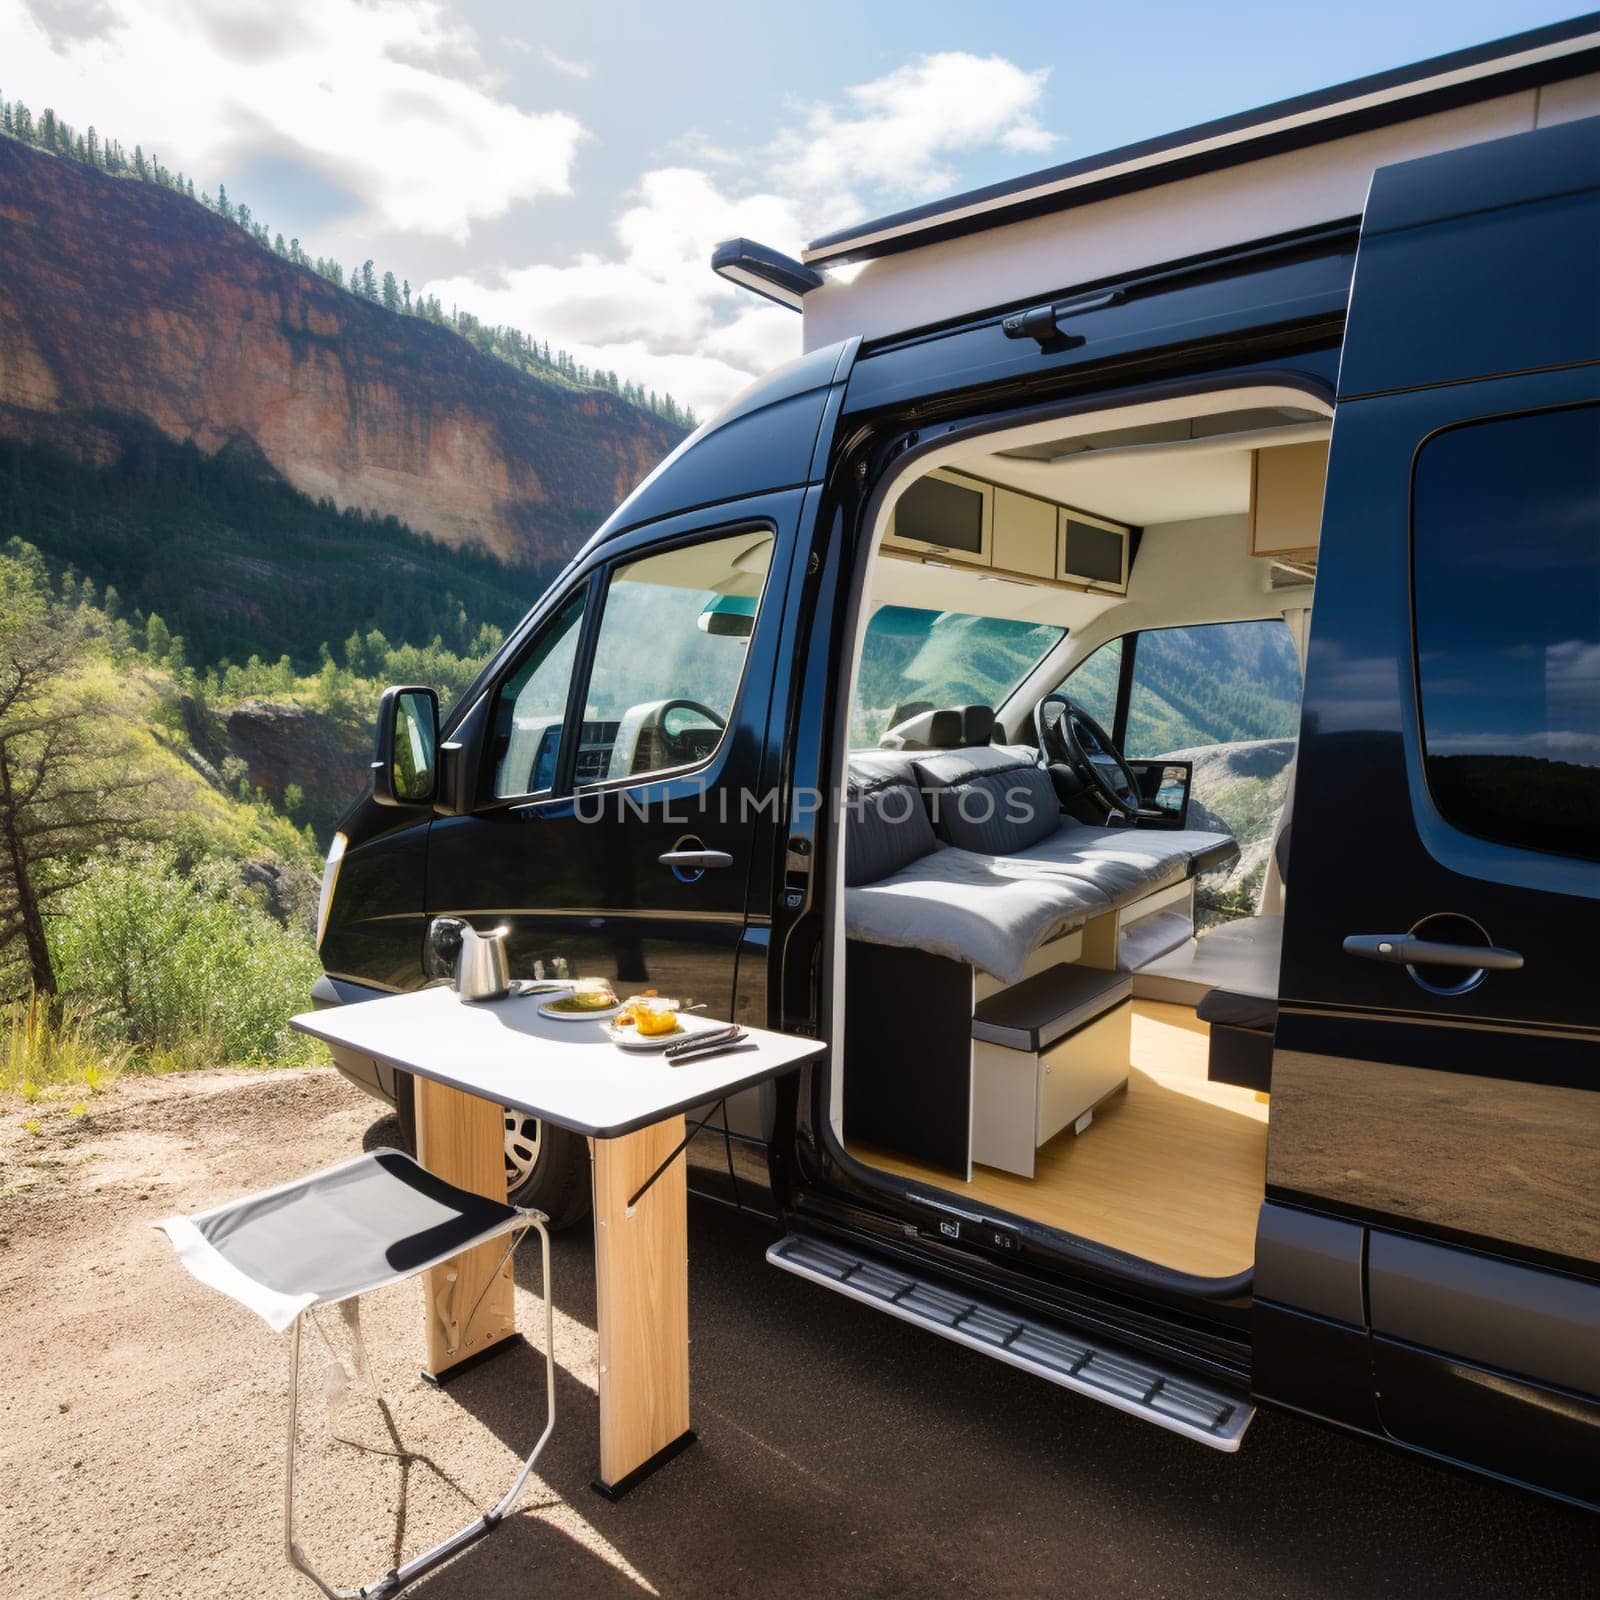 Sleek Camper Van on a Scenic Overlook by Sahin